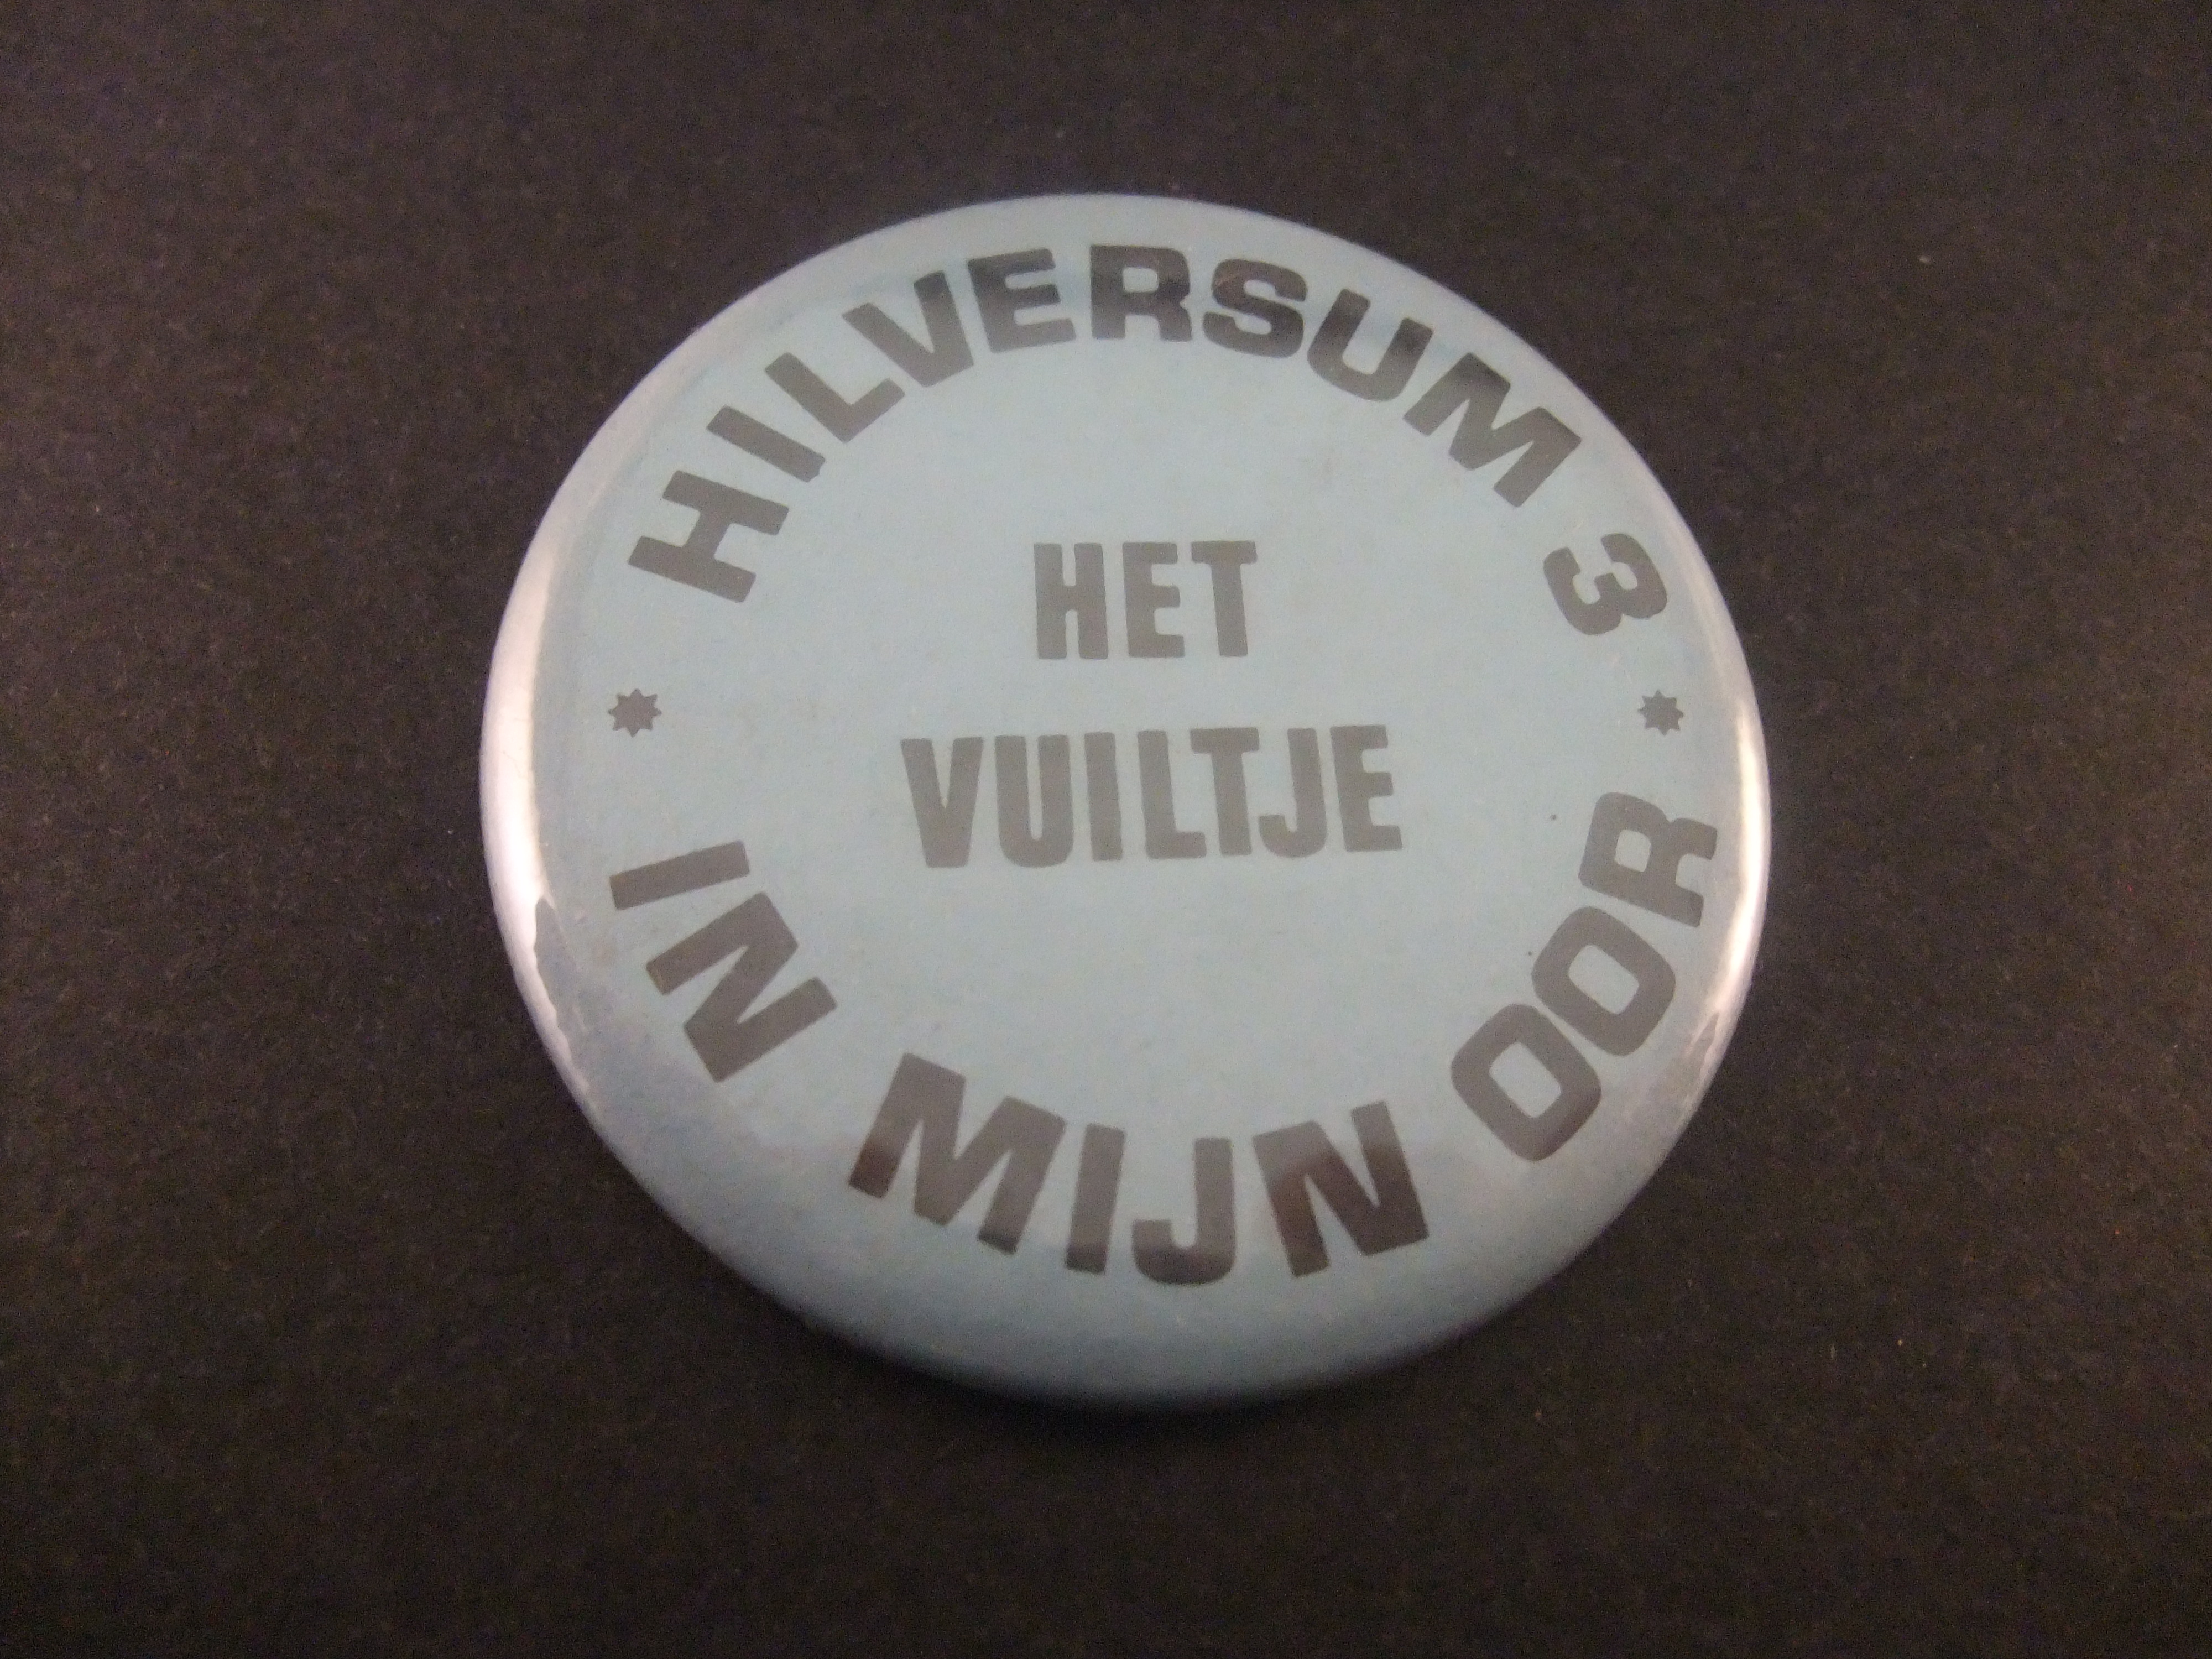 Hilversum 3 radio